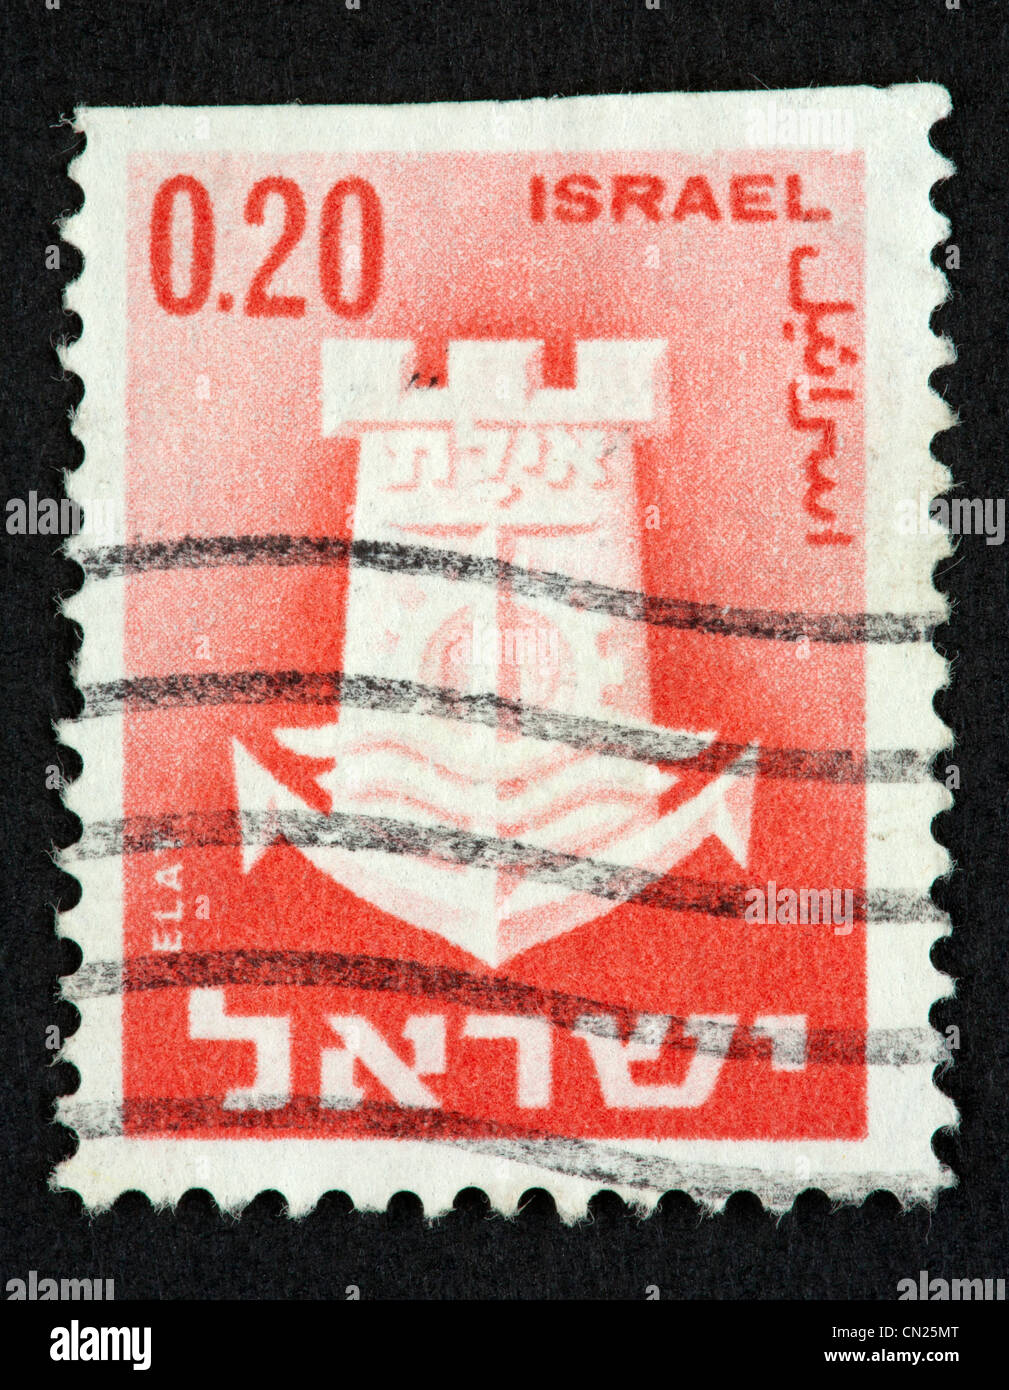 Israeli postage stamp Stock Photo